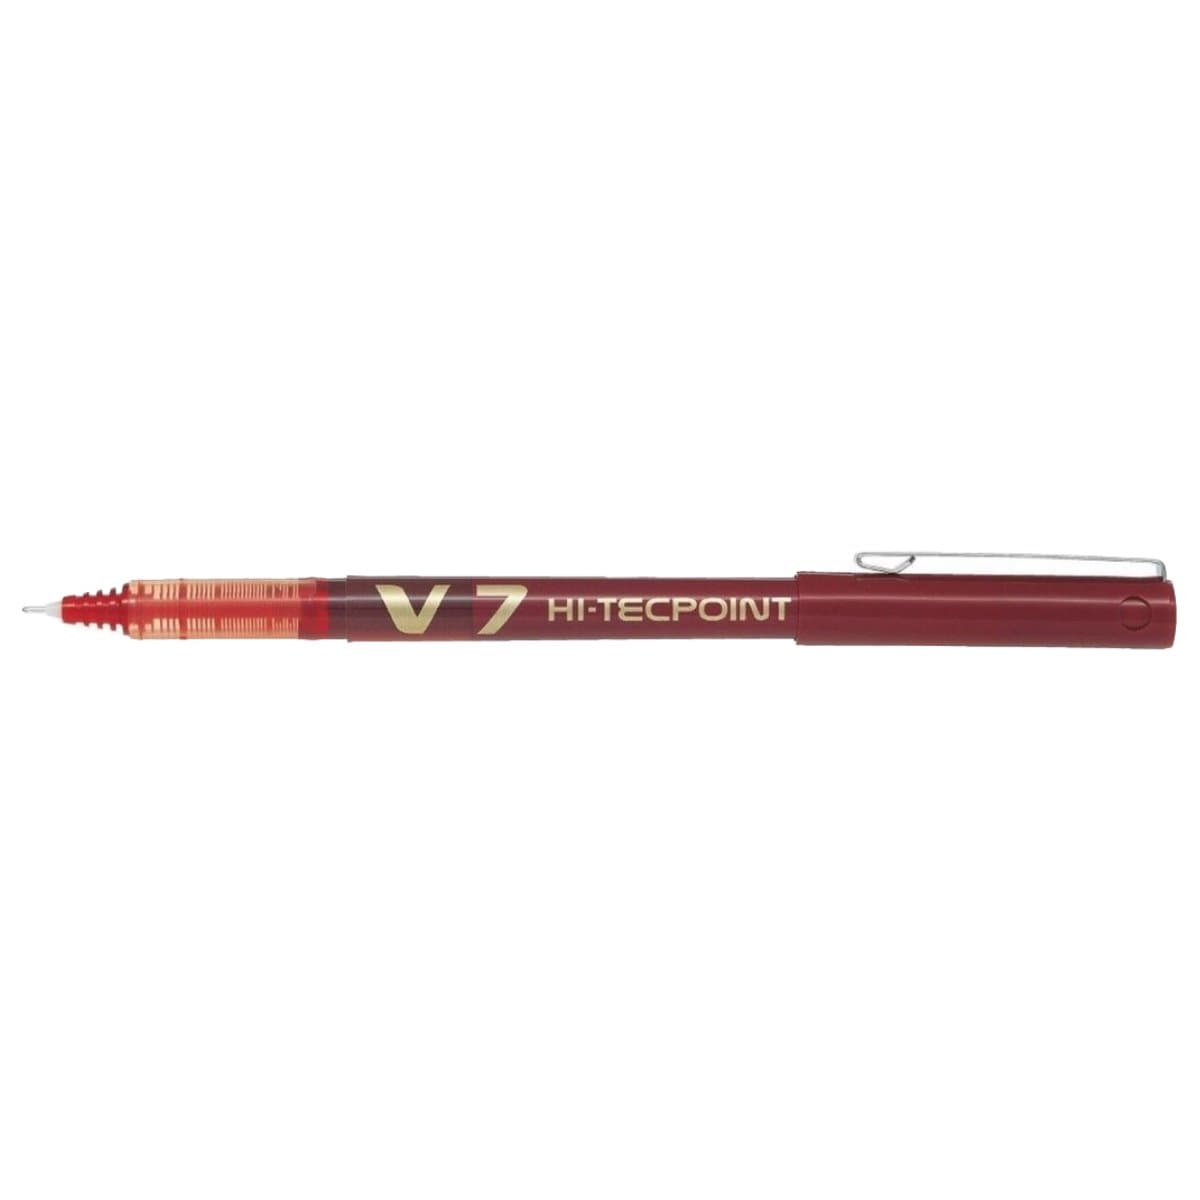 Pilot V7 Hi-Tecpoint BX-V7 Roller Ball Pen, 0.7mm, Red